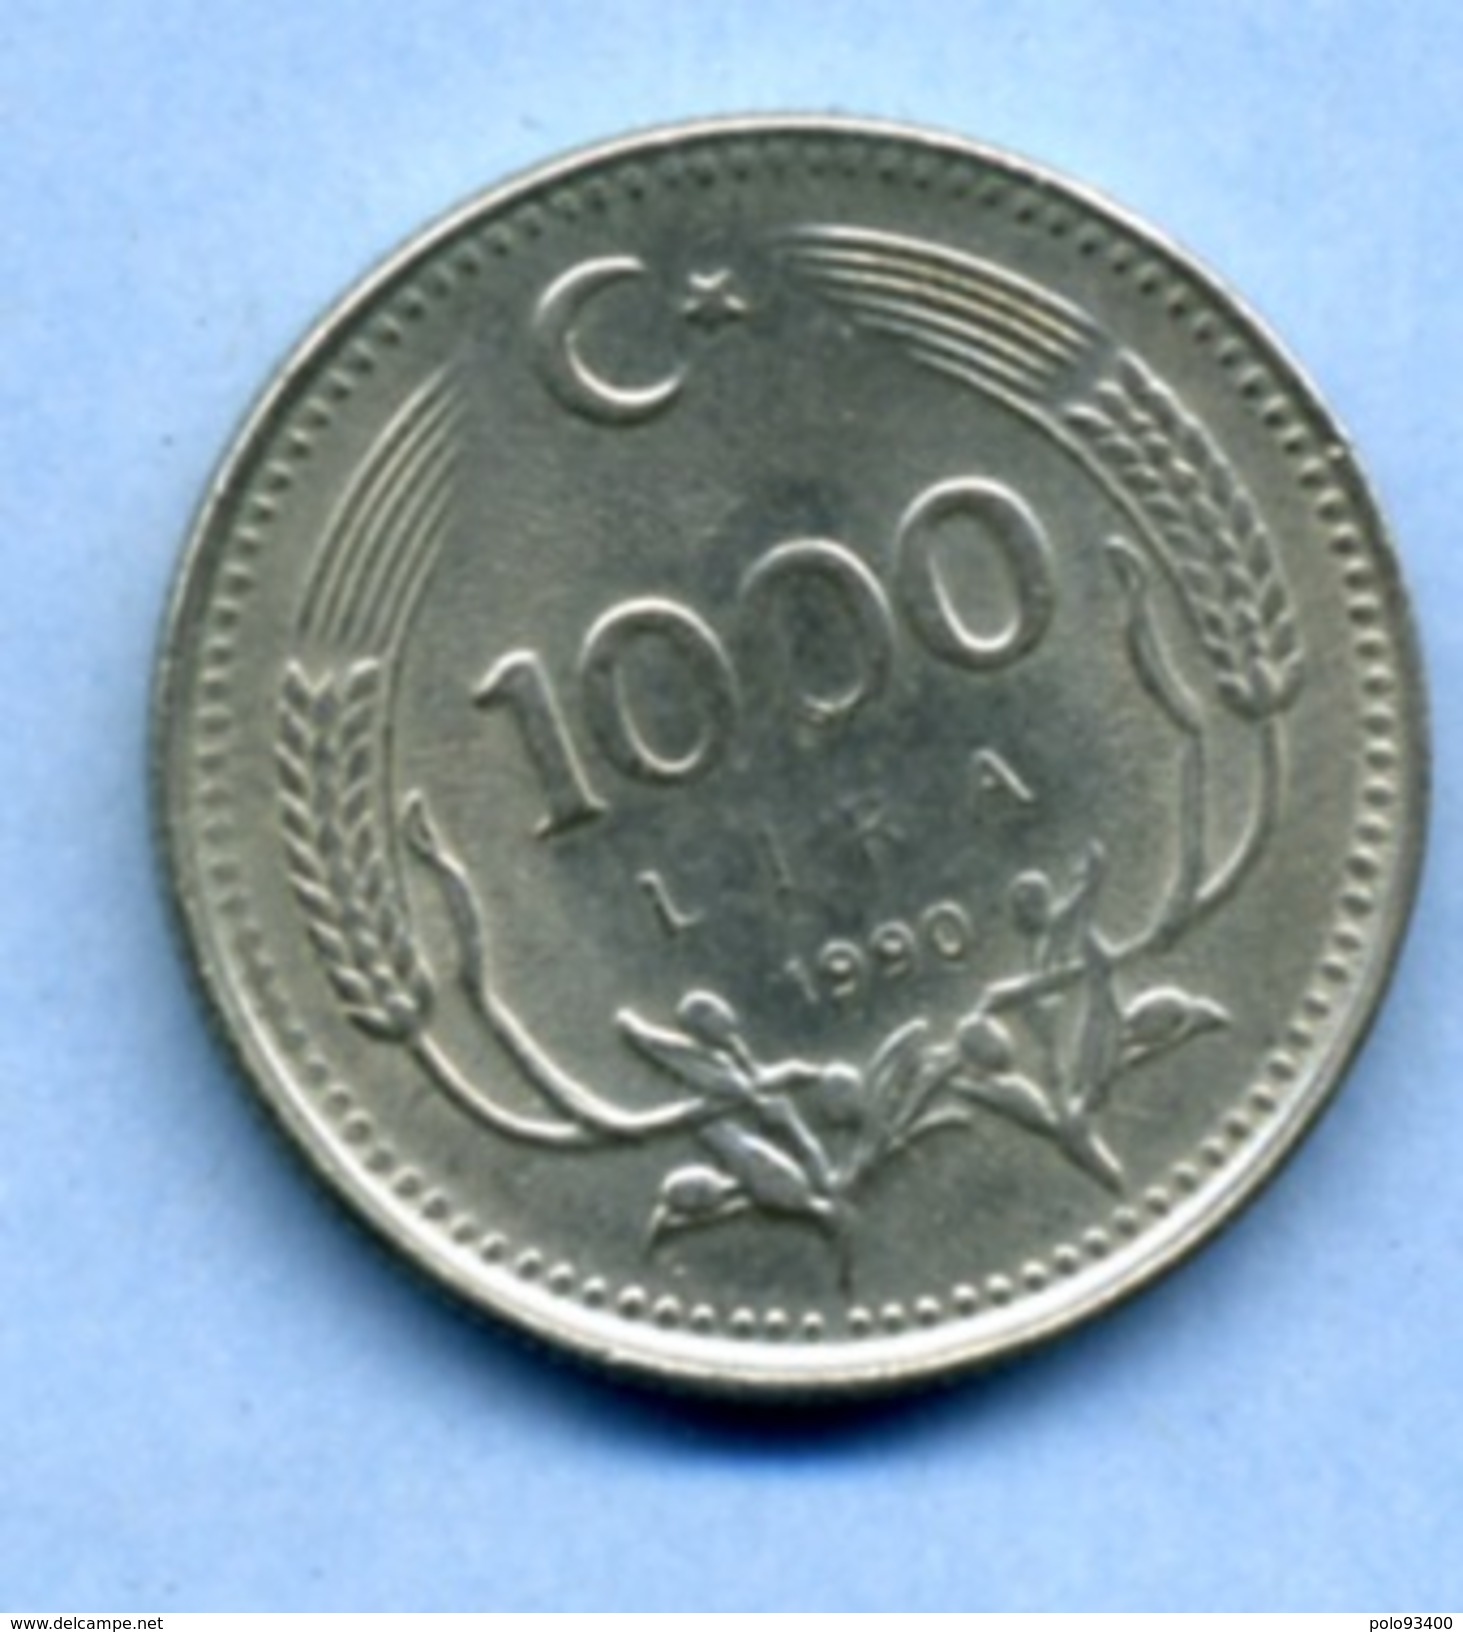 1990 1000 LIRA - Turquie